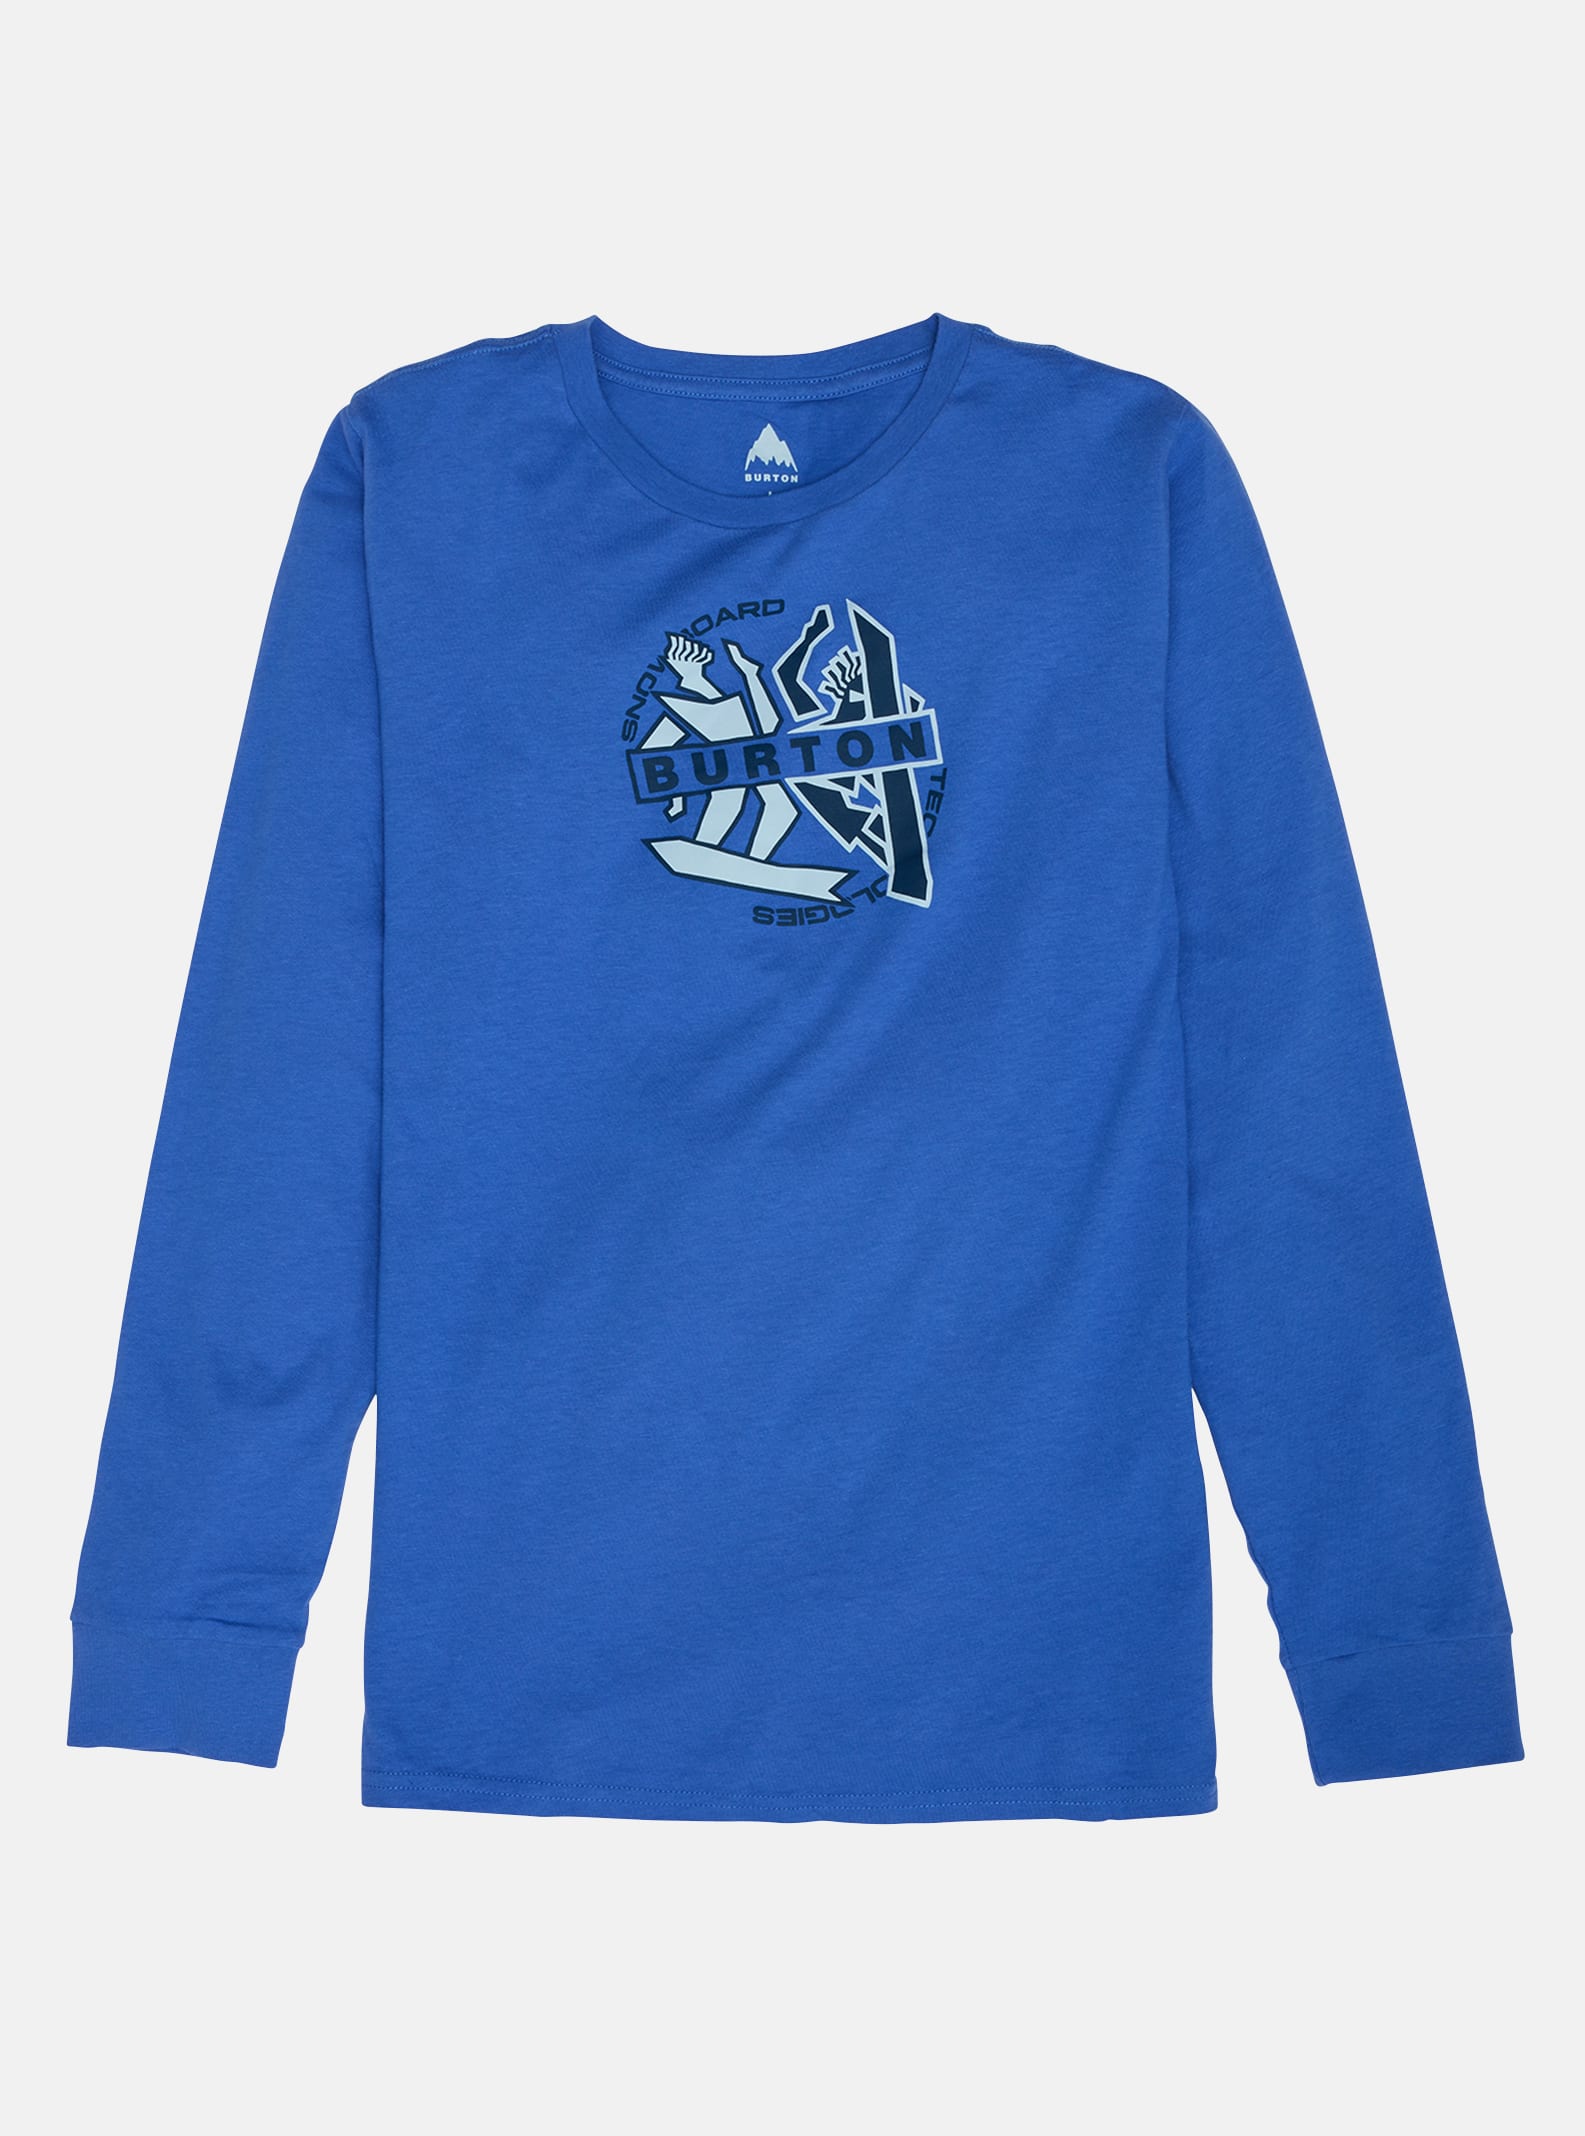 Burton Beal långärmad t-shirt för barn, Amparo Blue, XL